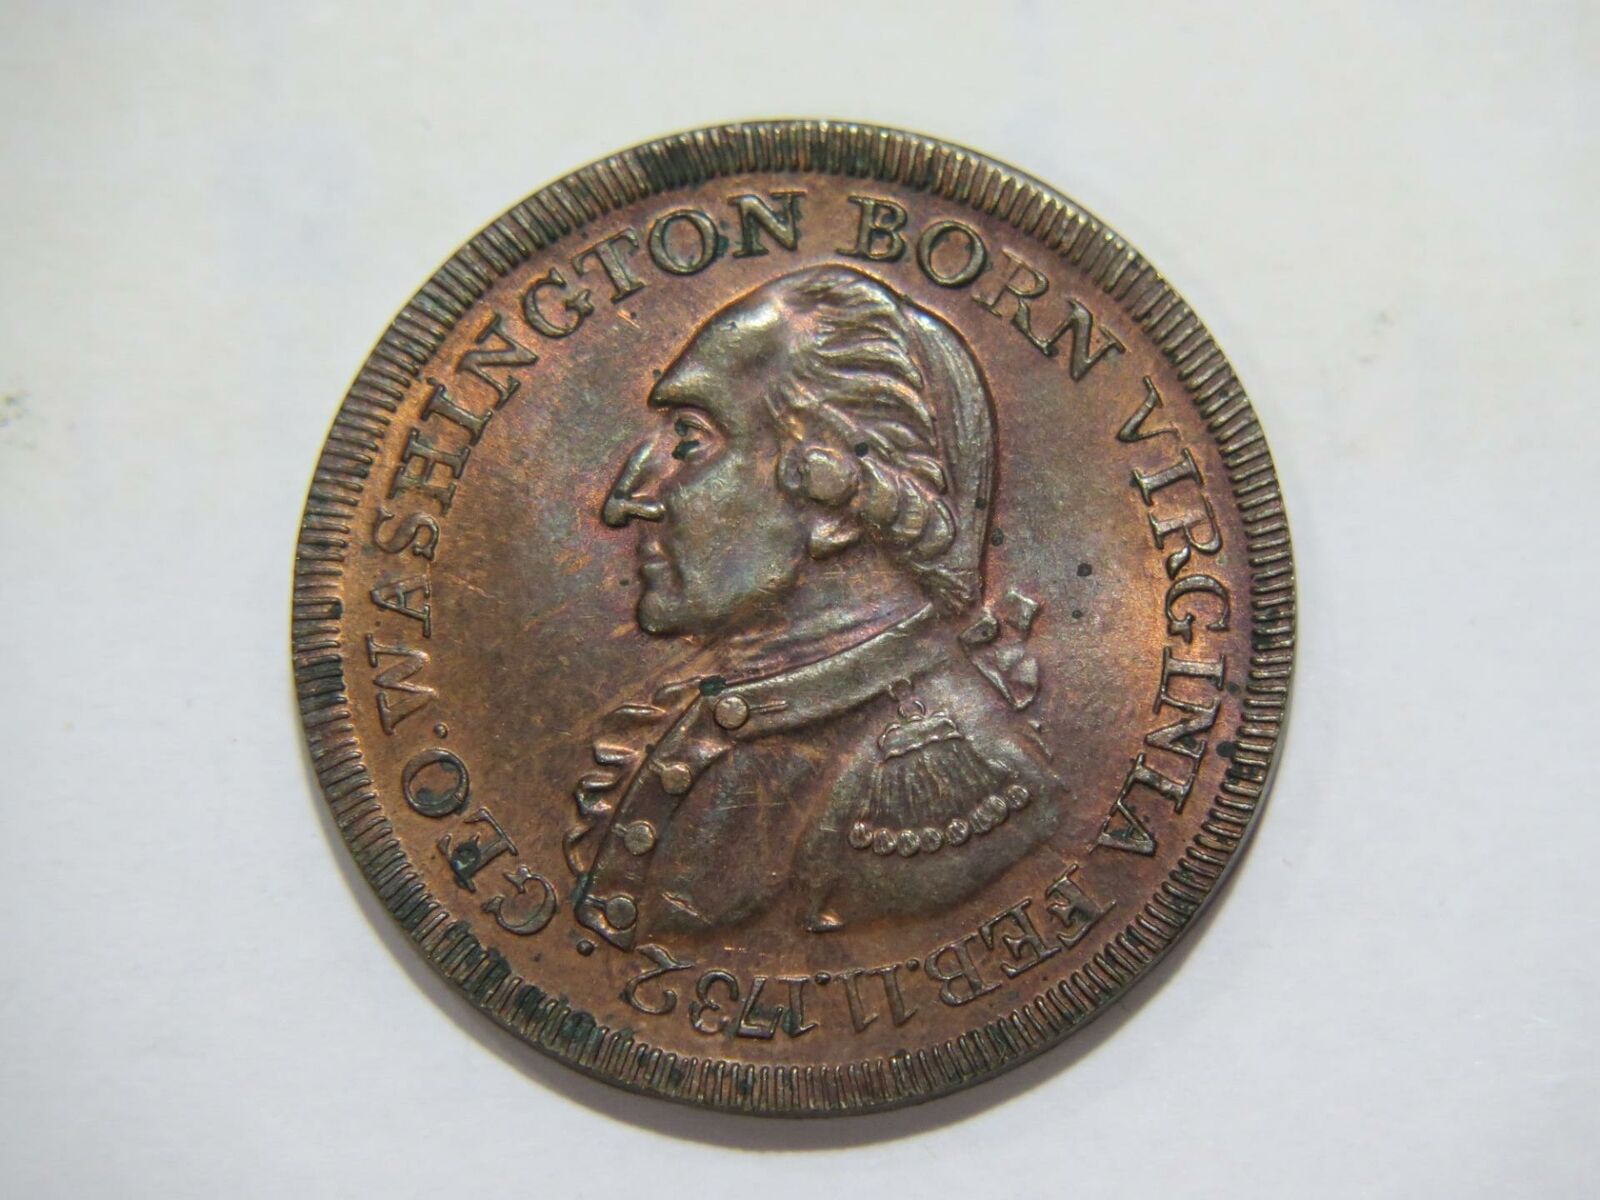 Washington Born Virginia Copper Uniface Collis Restrike Medal 🌈⭐🌈